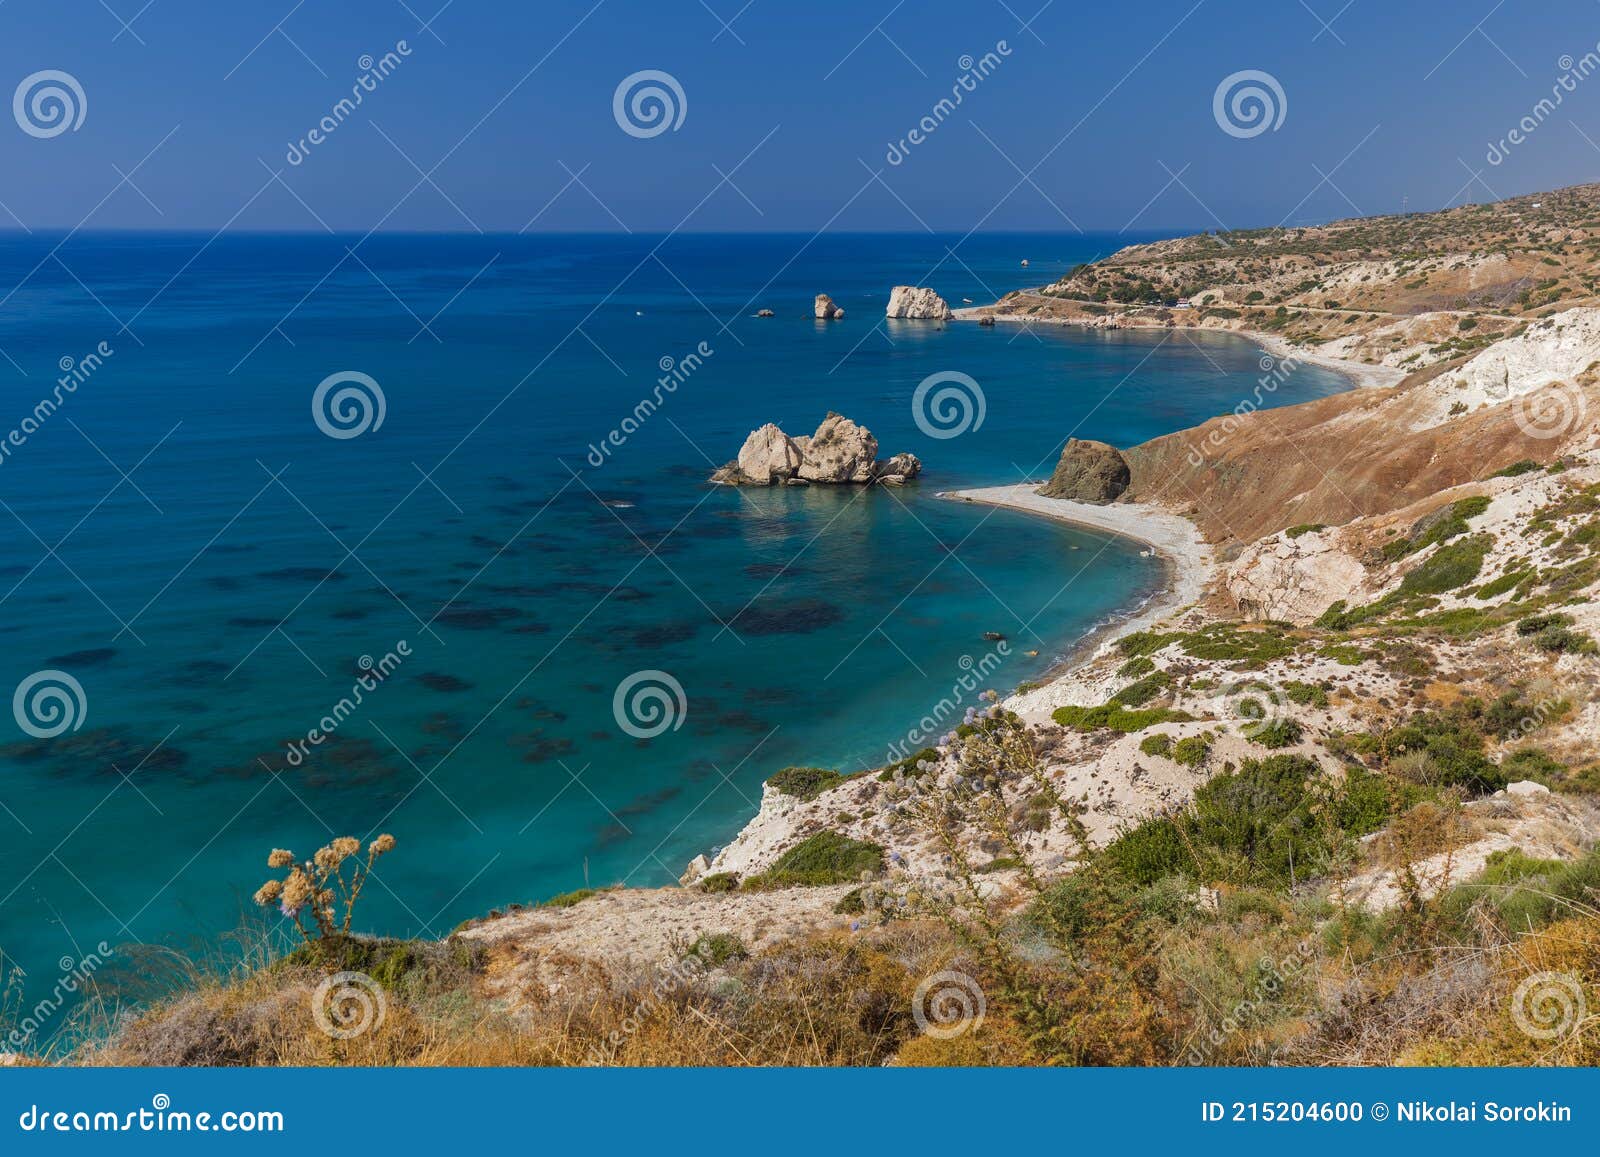 aphrodite rock in paphos cyprus